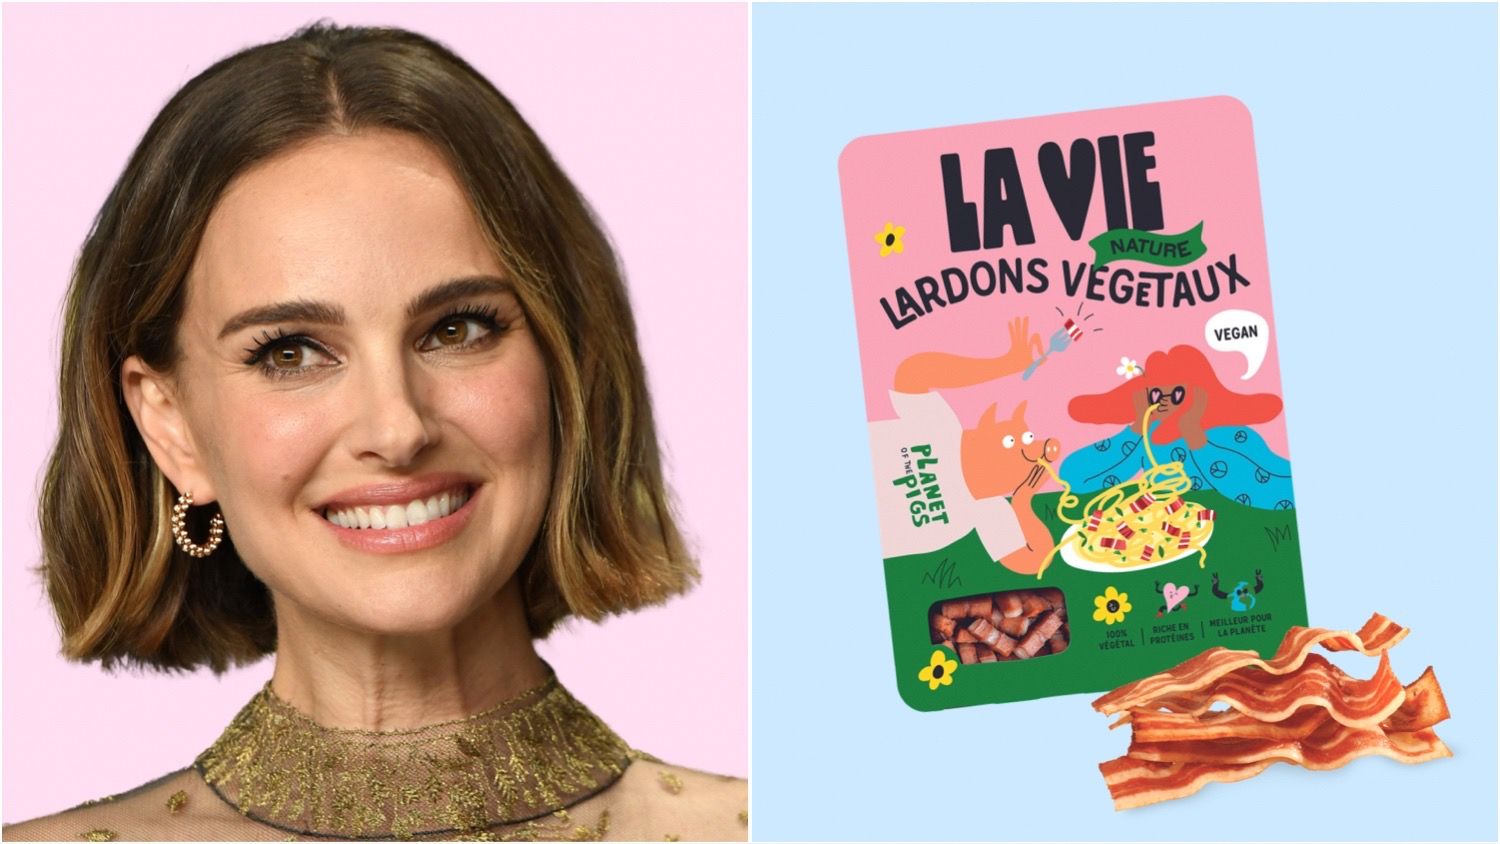 Natalie Portman split with La Vie vegan lardons